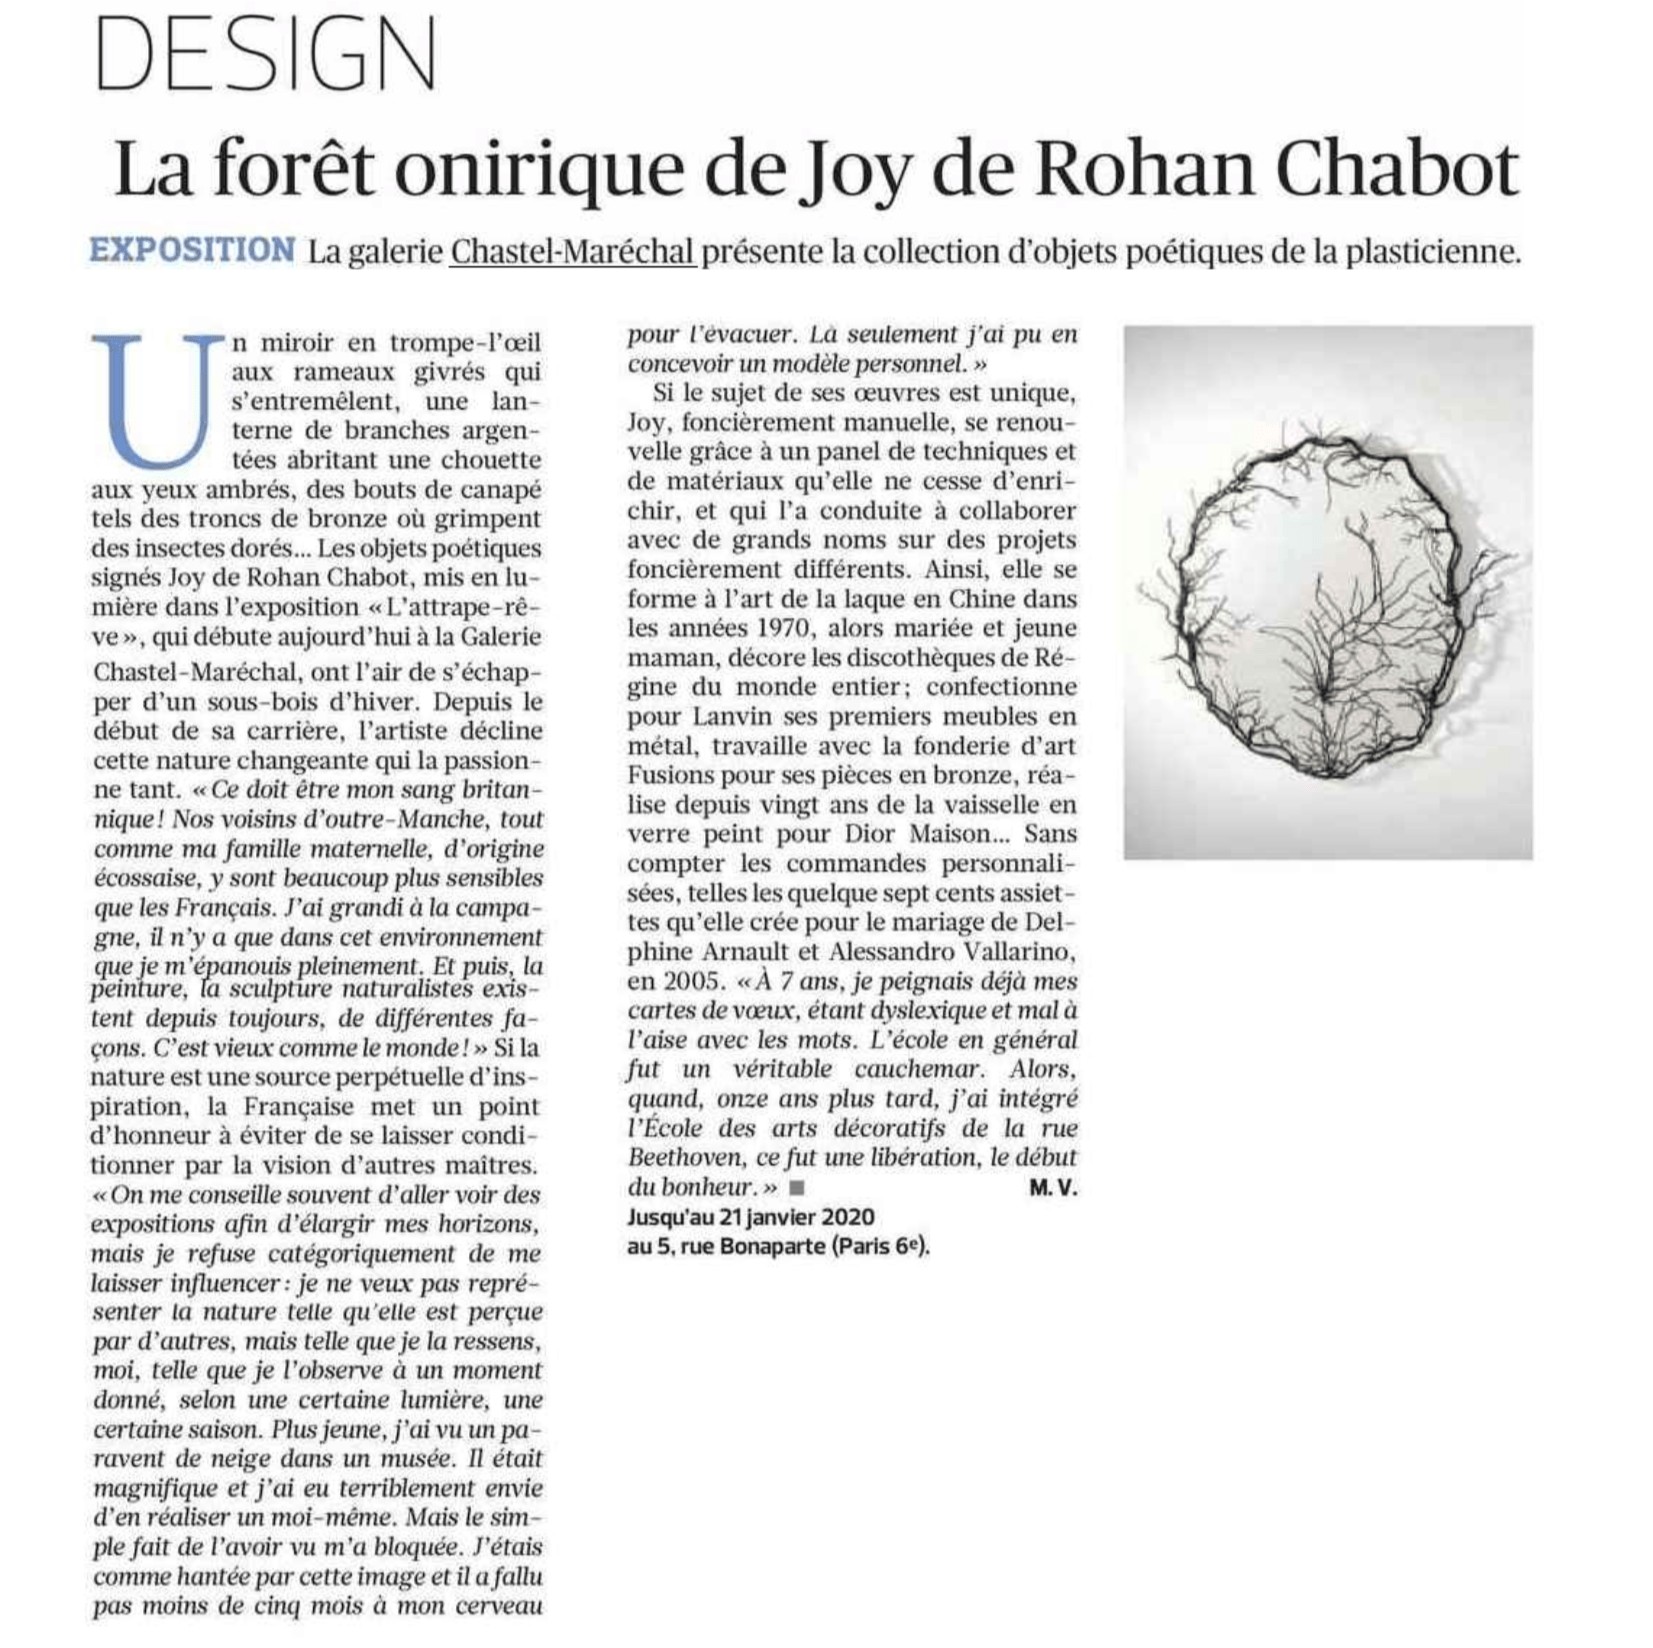 Le Figaro, La forêt onirique de Joy de Rohan Chabot, November 2019